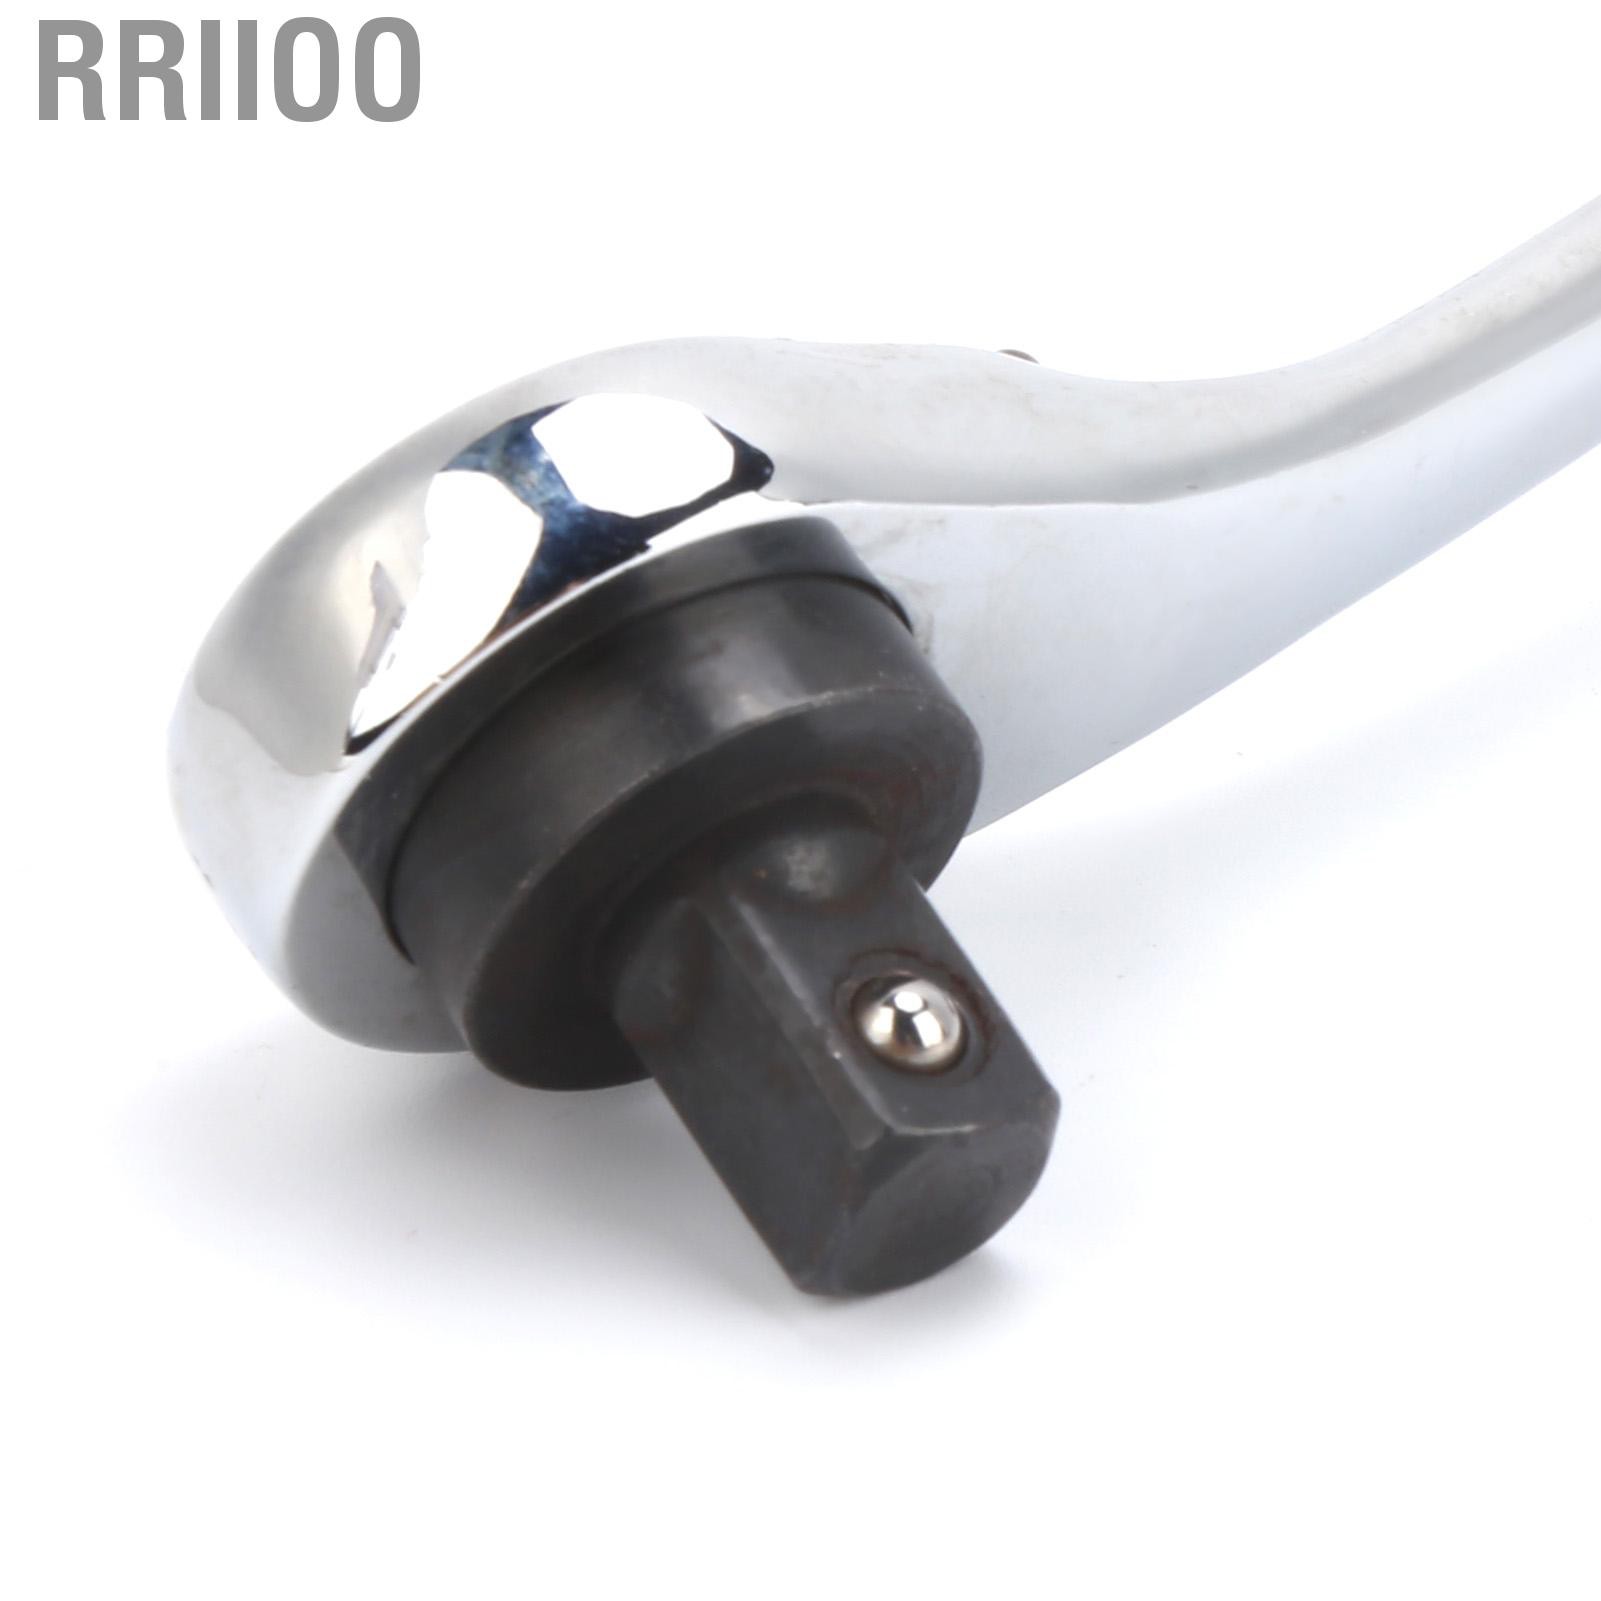 Rriioo 3/8in 72 Teeth Ratchet Wrench Chromium Vanadium Steel Socket Maintenance Tools